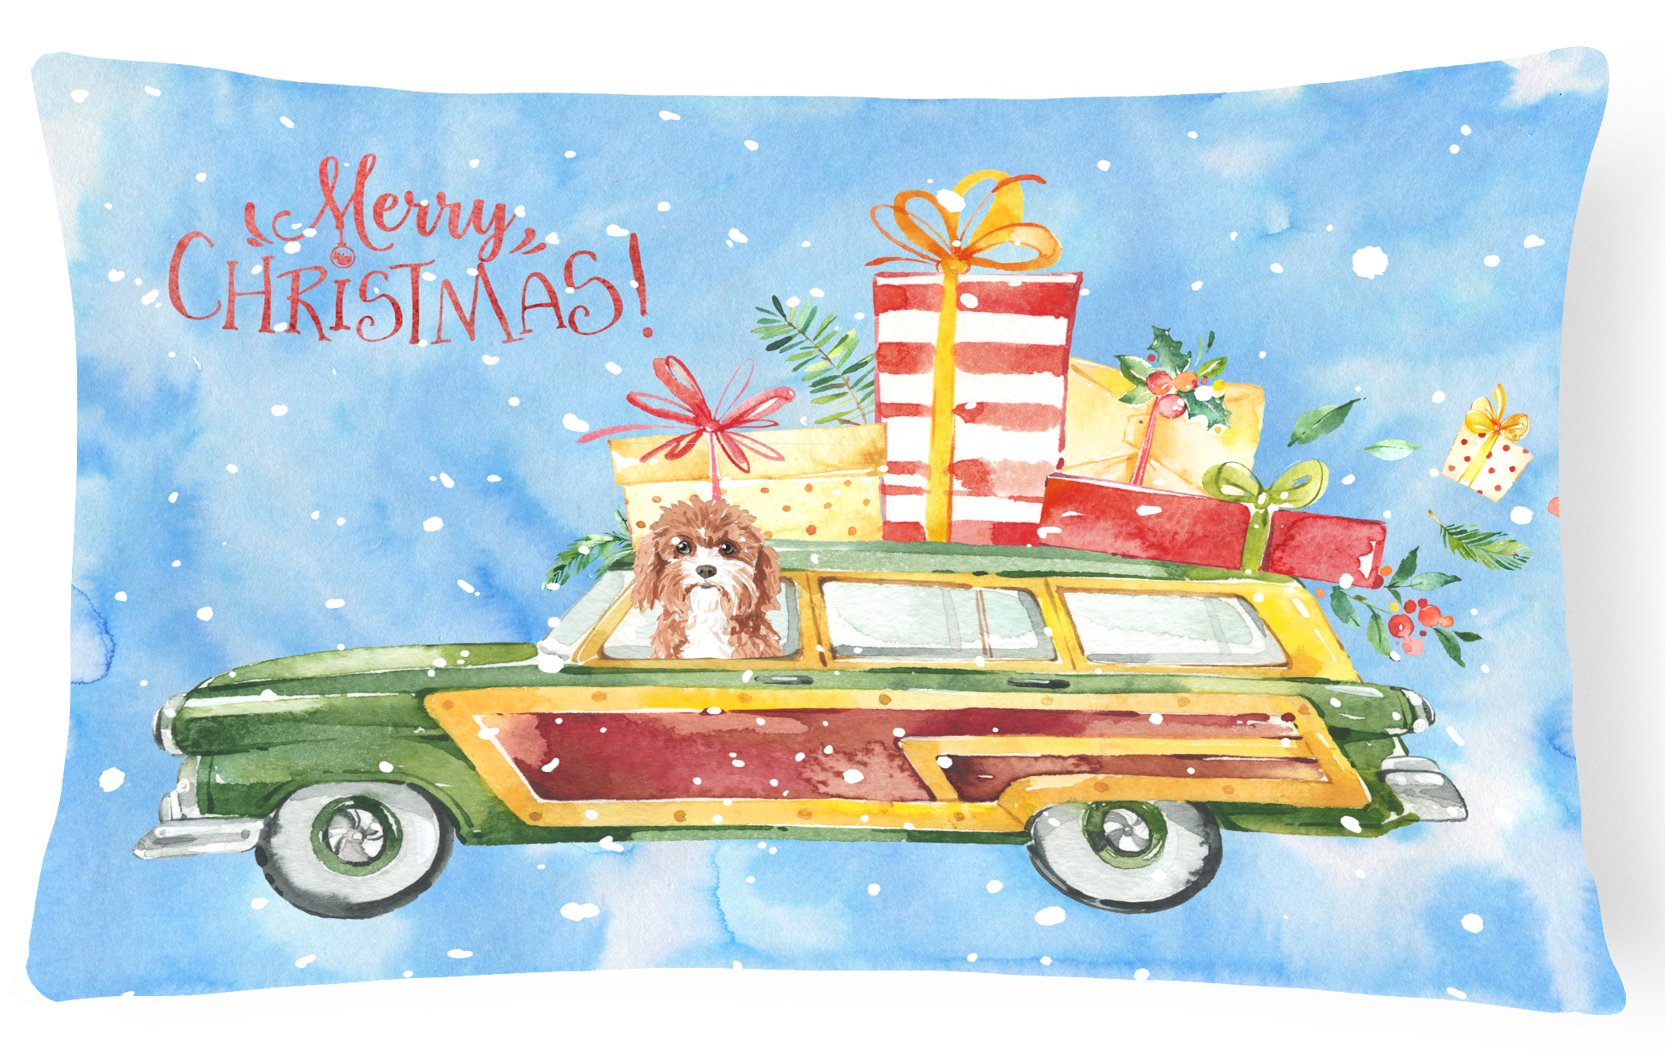 Merry Christmas Cavapoo Canvas Fabric Decorative Pillow CK2403PW1216 by Caroline's Treasures